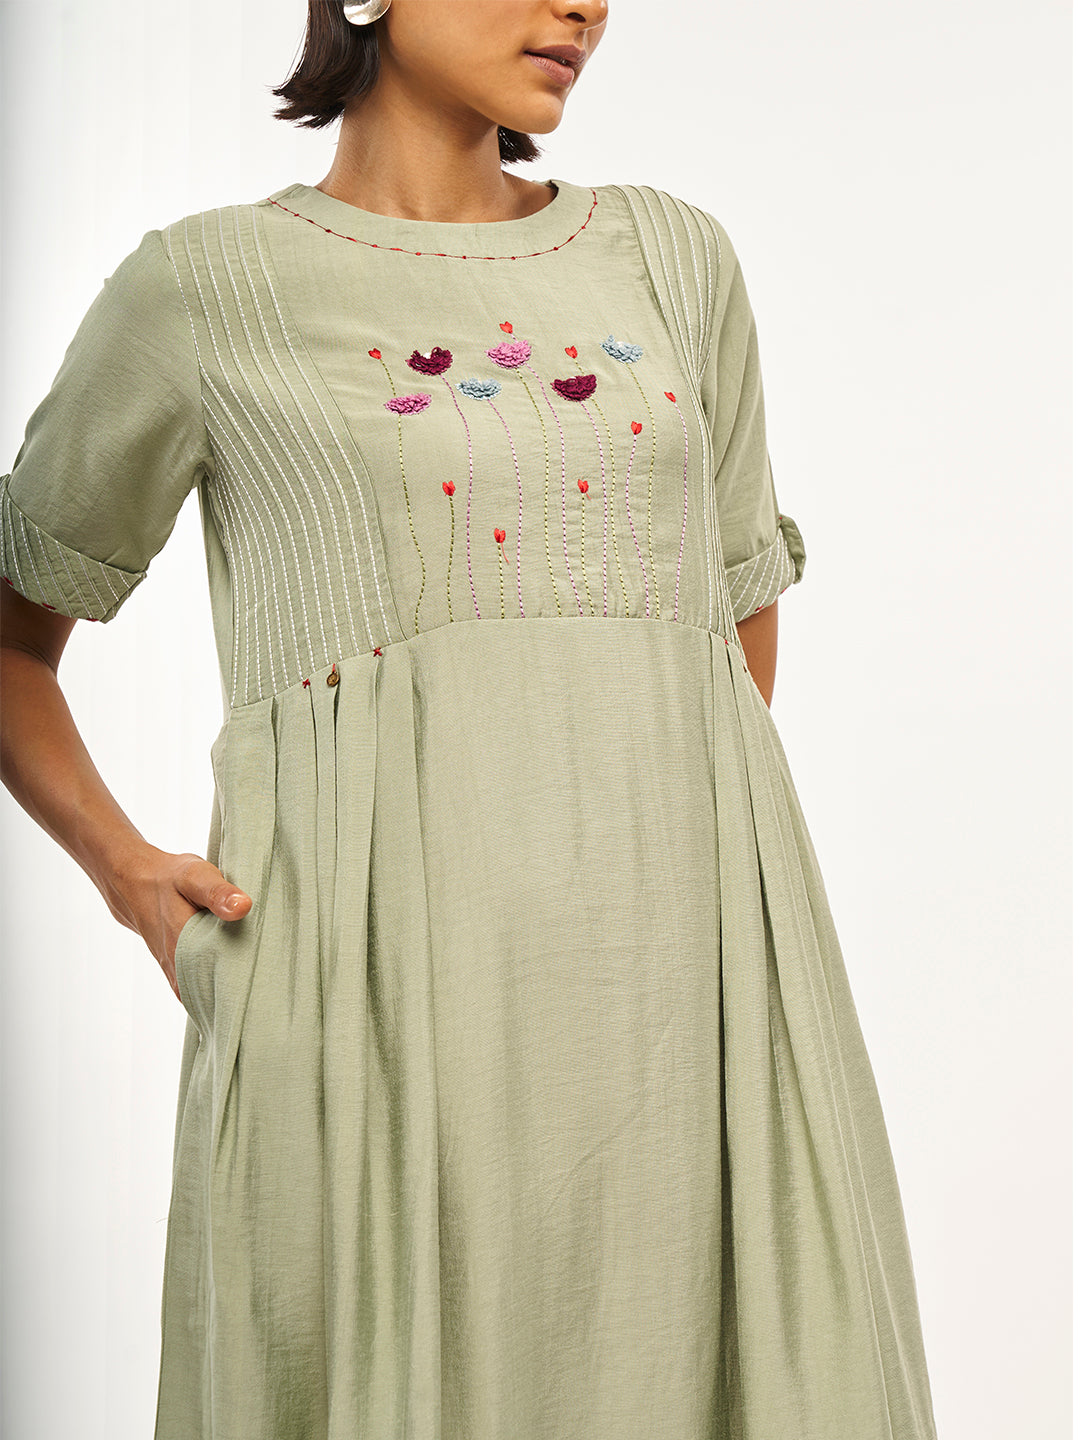 Pista Embroidered Gathered Dress - ARH122